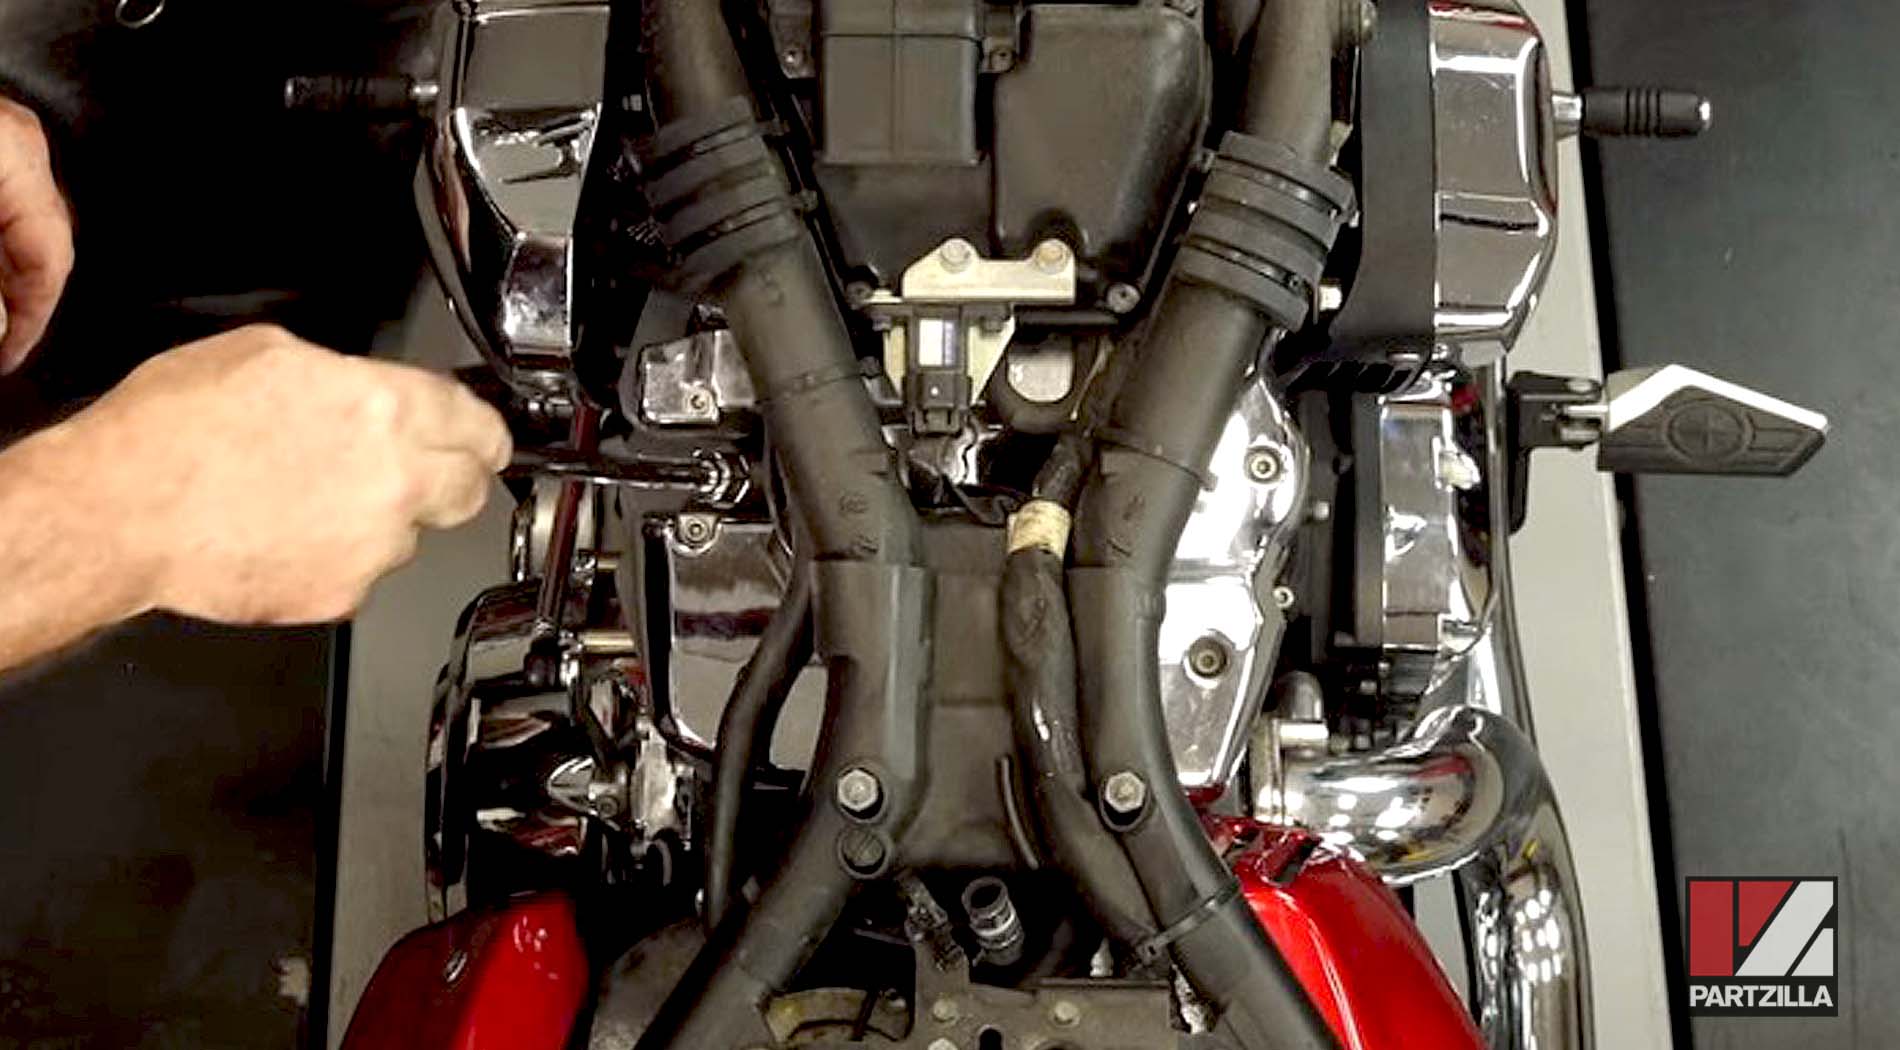 Yamaha Raider motorcycle spark plugs change remove old plugs